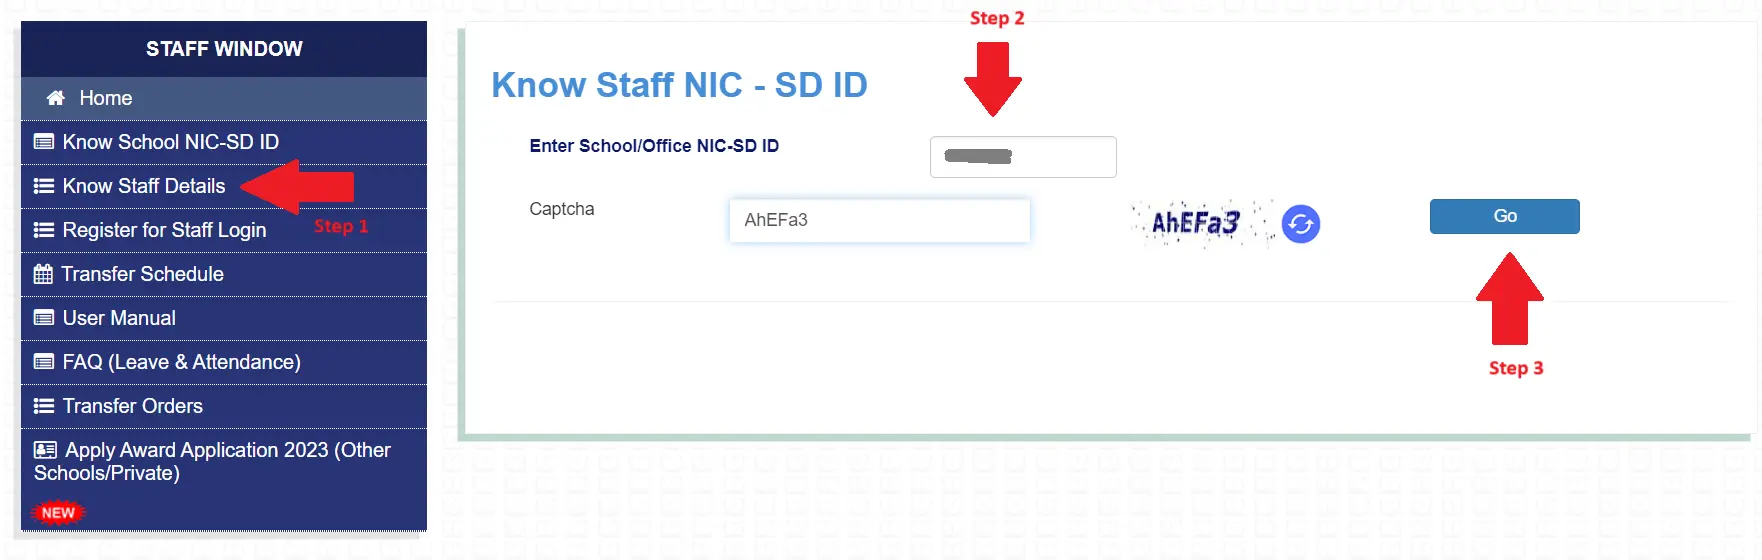 Search Staff NIC-SD ID